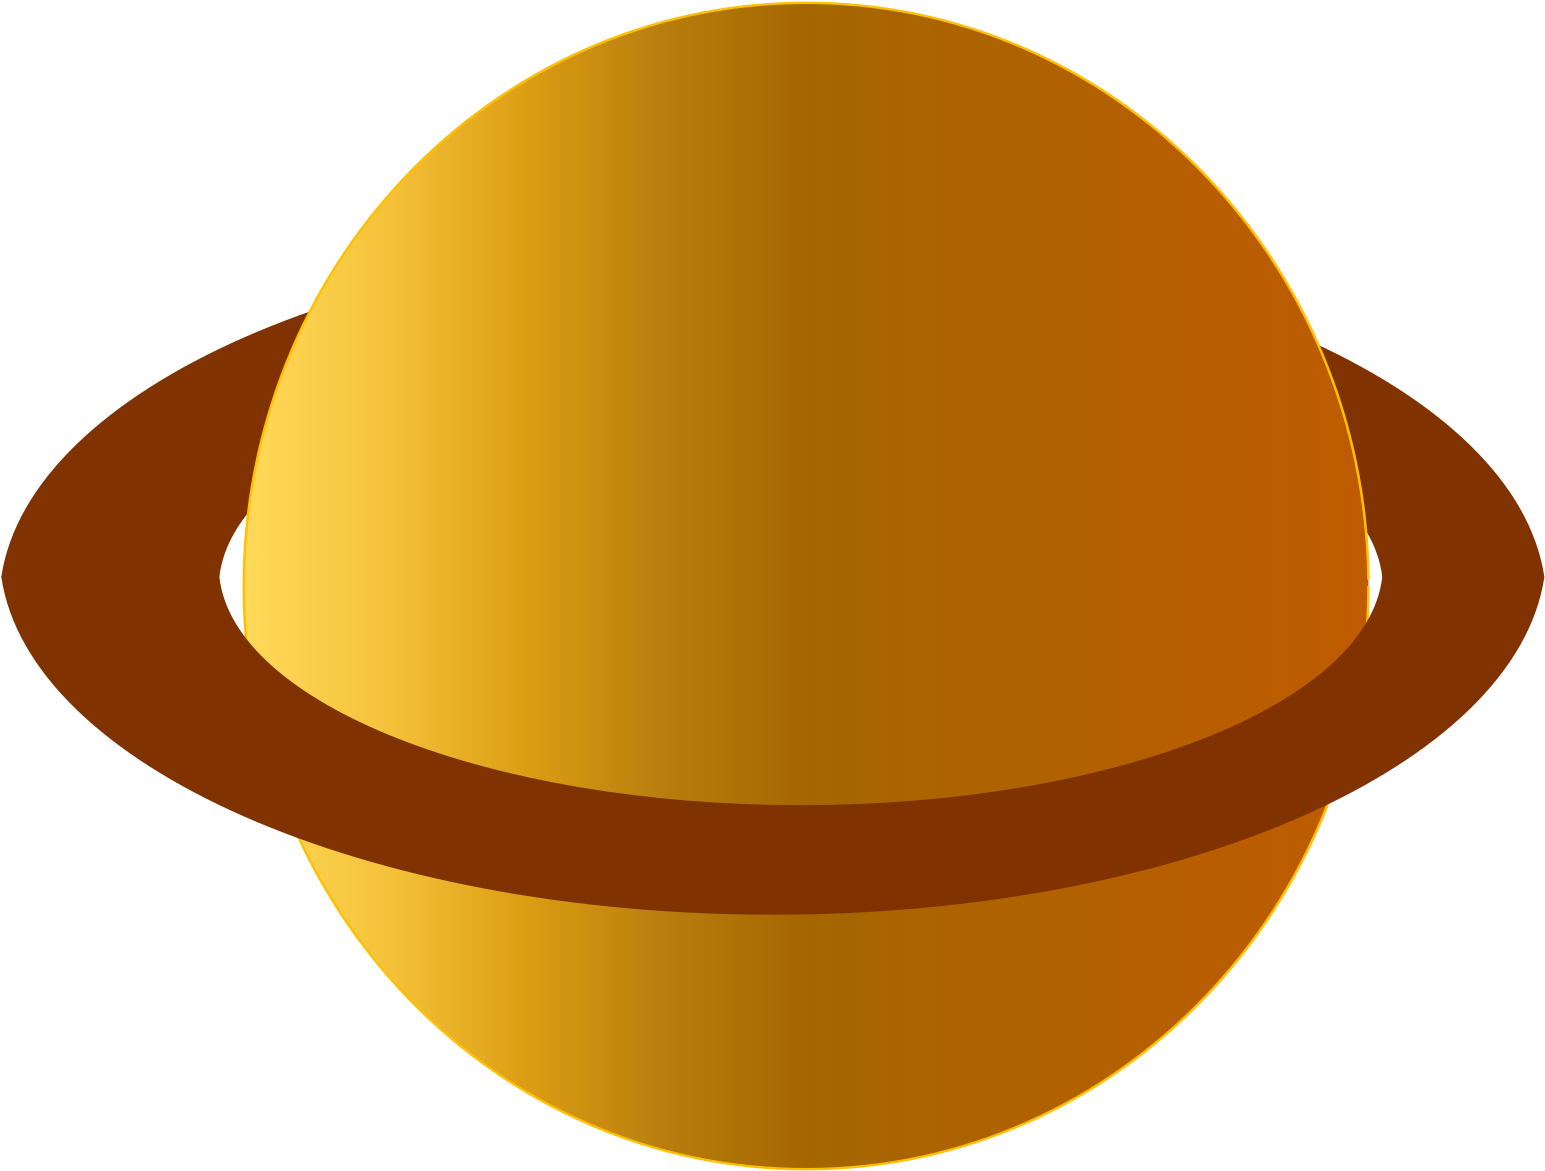 Big Image - Saturn (1697x2400)